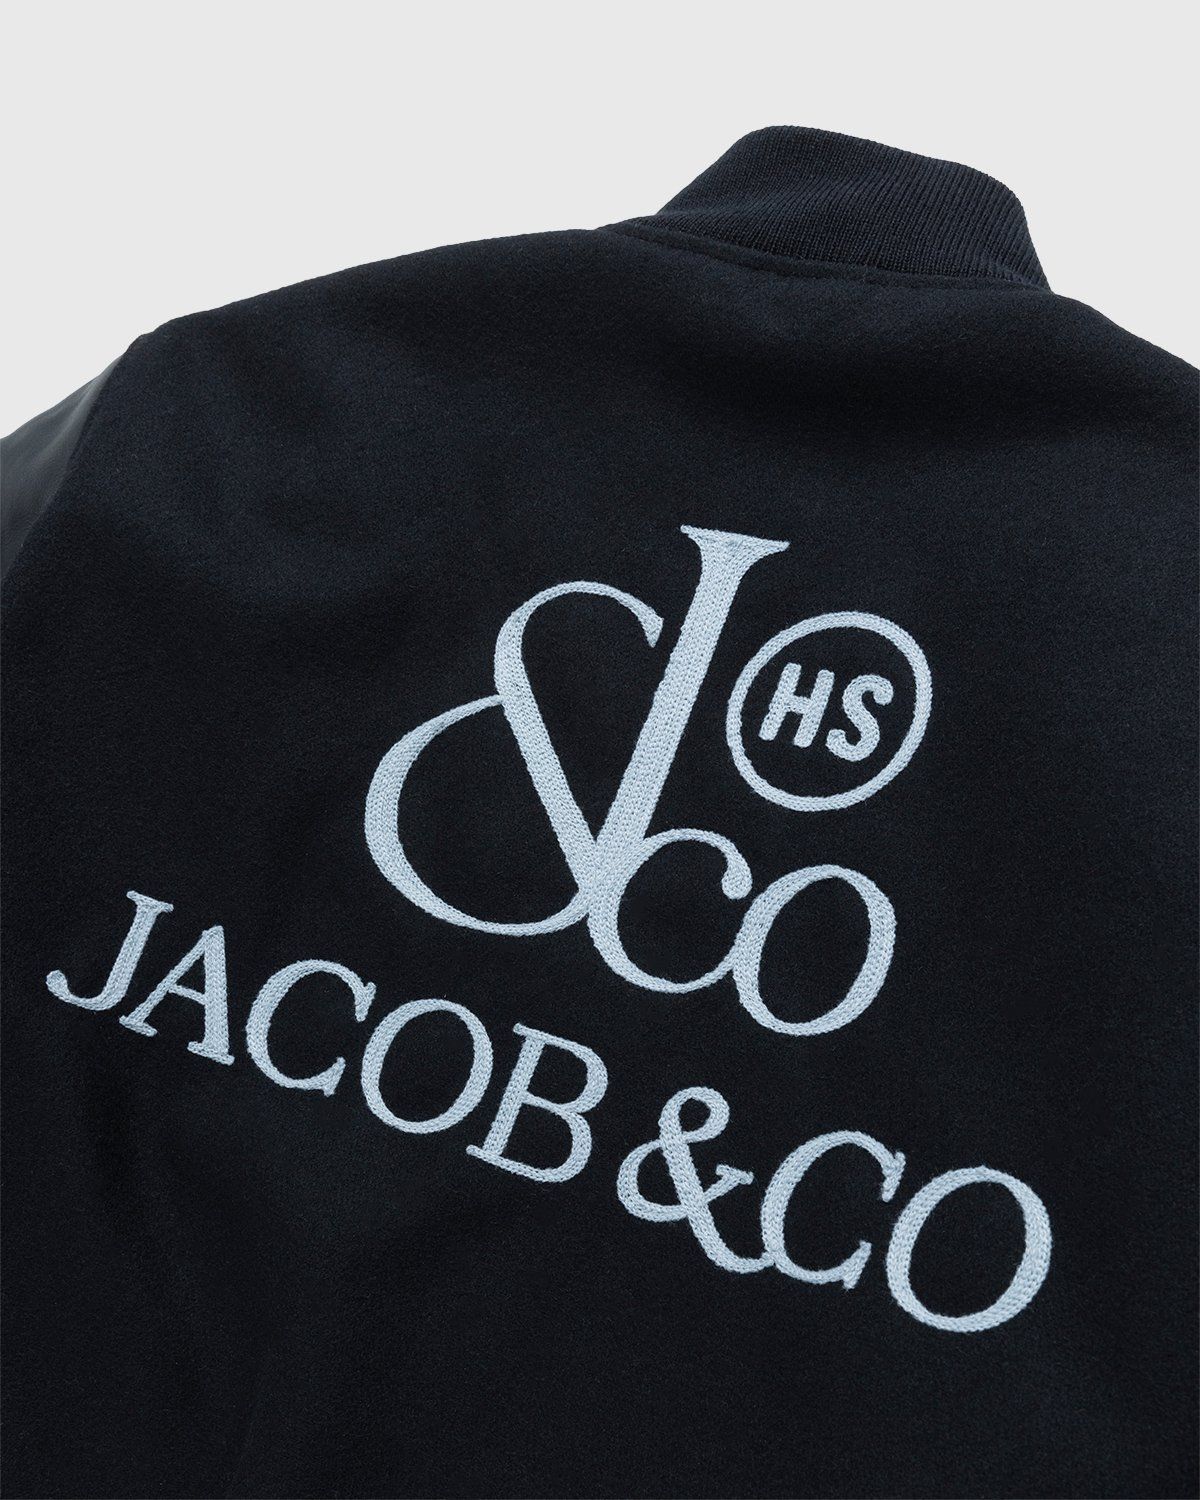 Jacob & Co. x Highsnobiety – Logo Varsity Jacket Black - Image 4